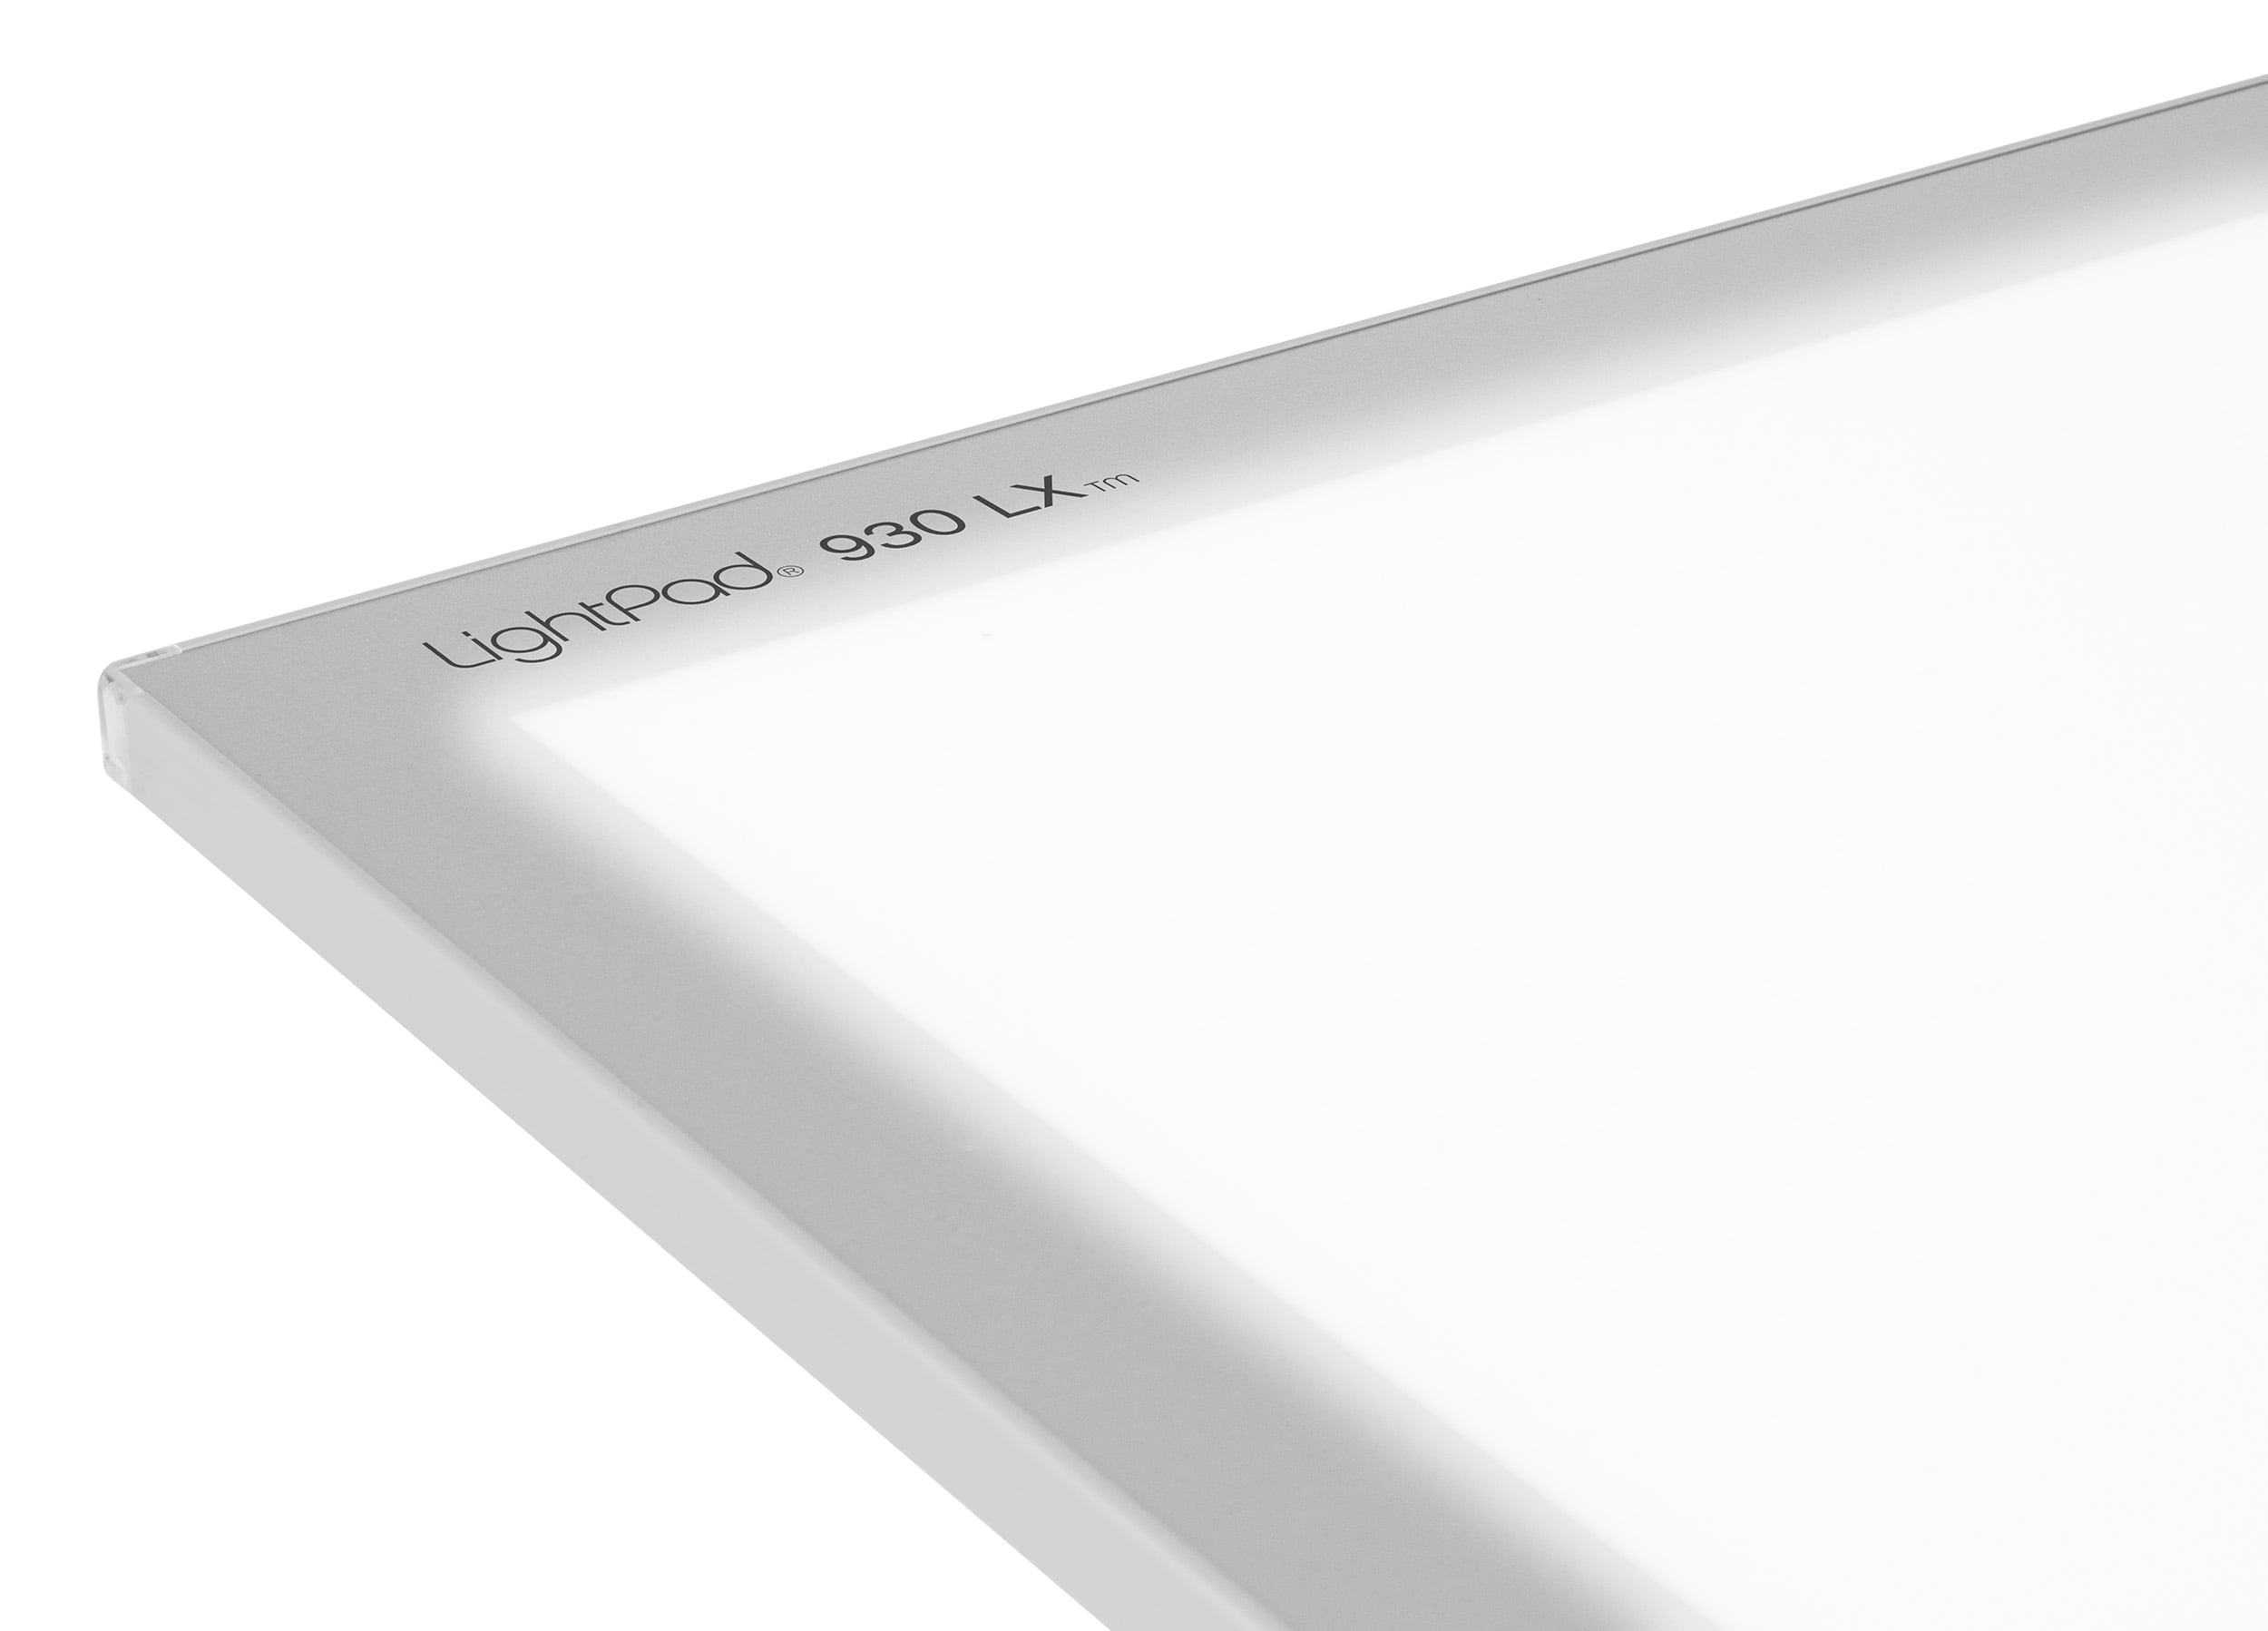 Artograph LightPad® 920 LX 9x6 Thin, Dimmable Light Box for Tracing -  20319711